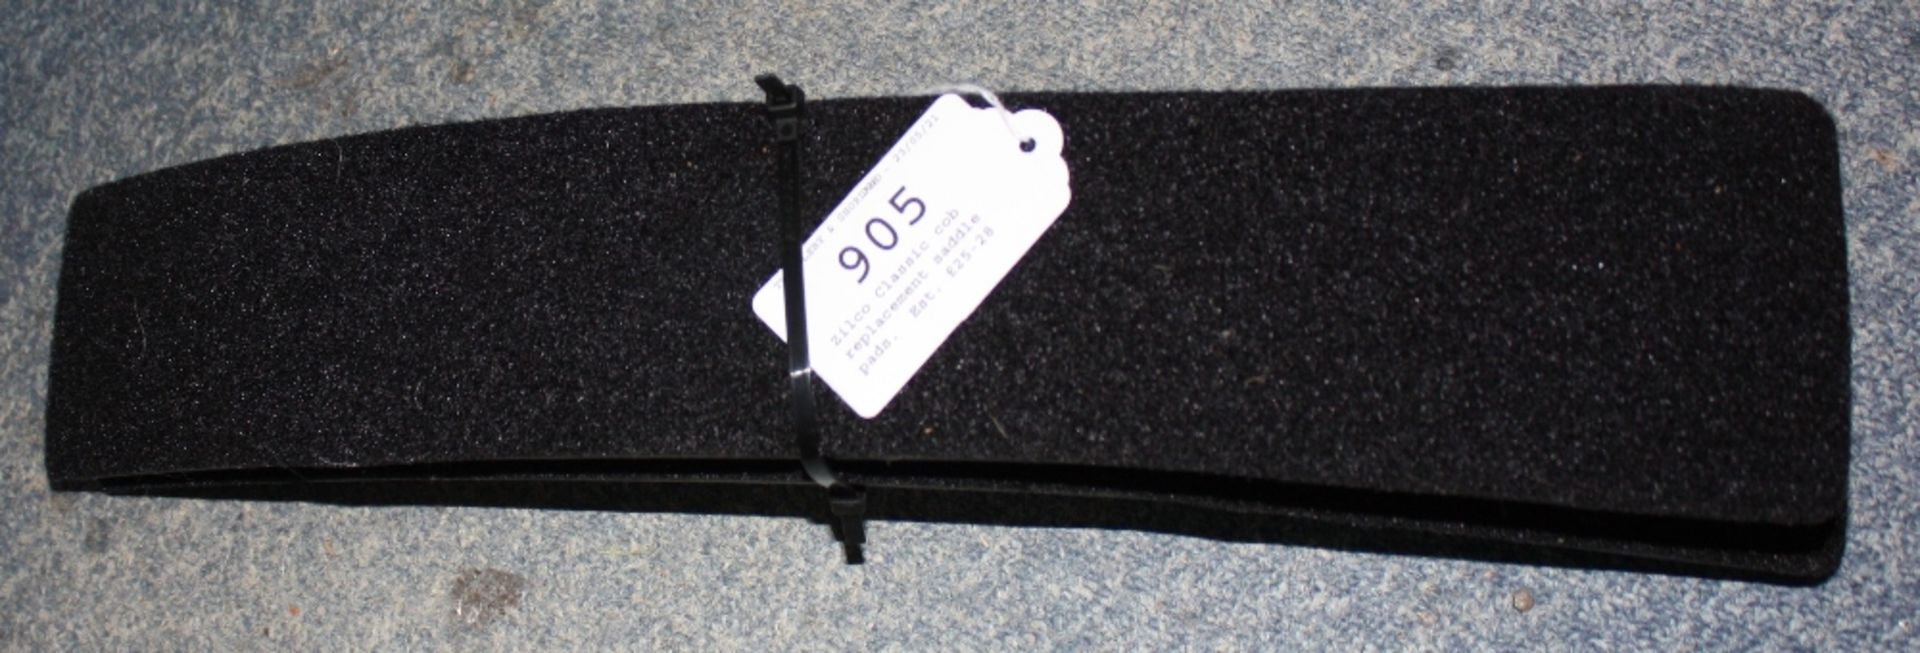 Zilco Classic cob replacement saddle pads. - Image 2 of 2